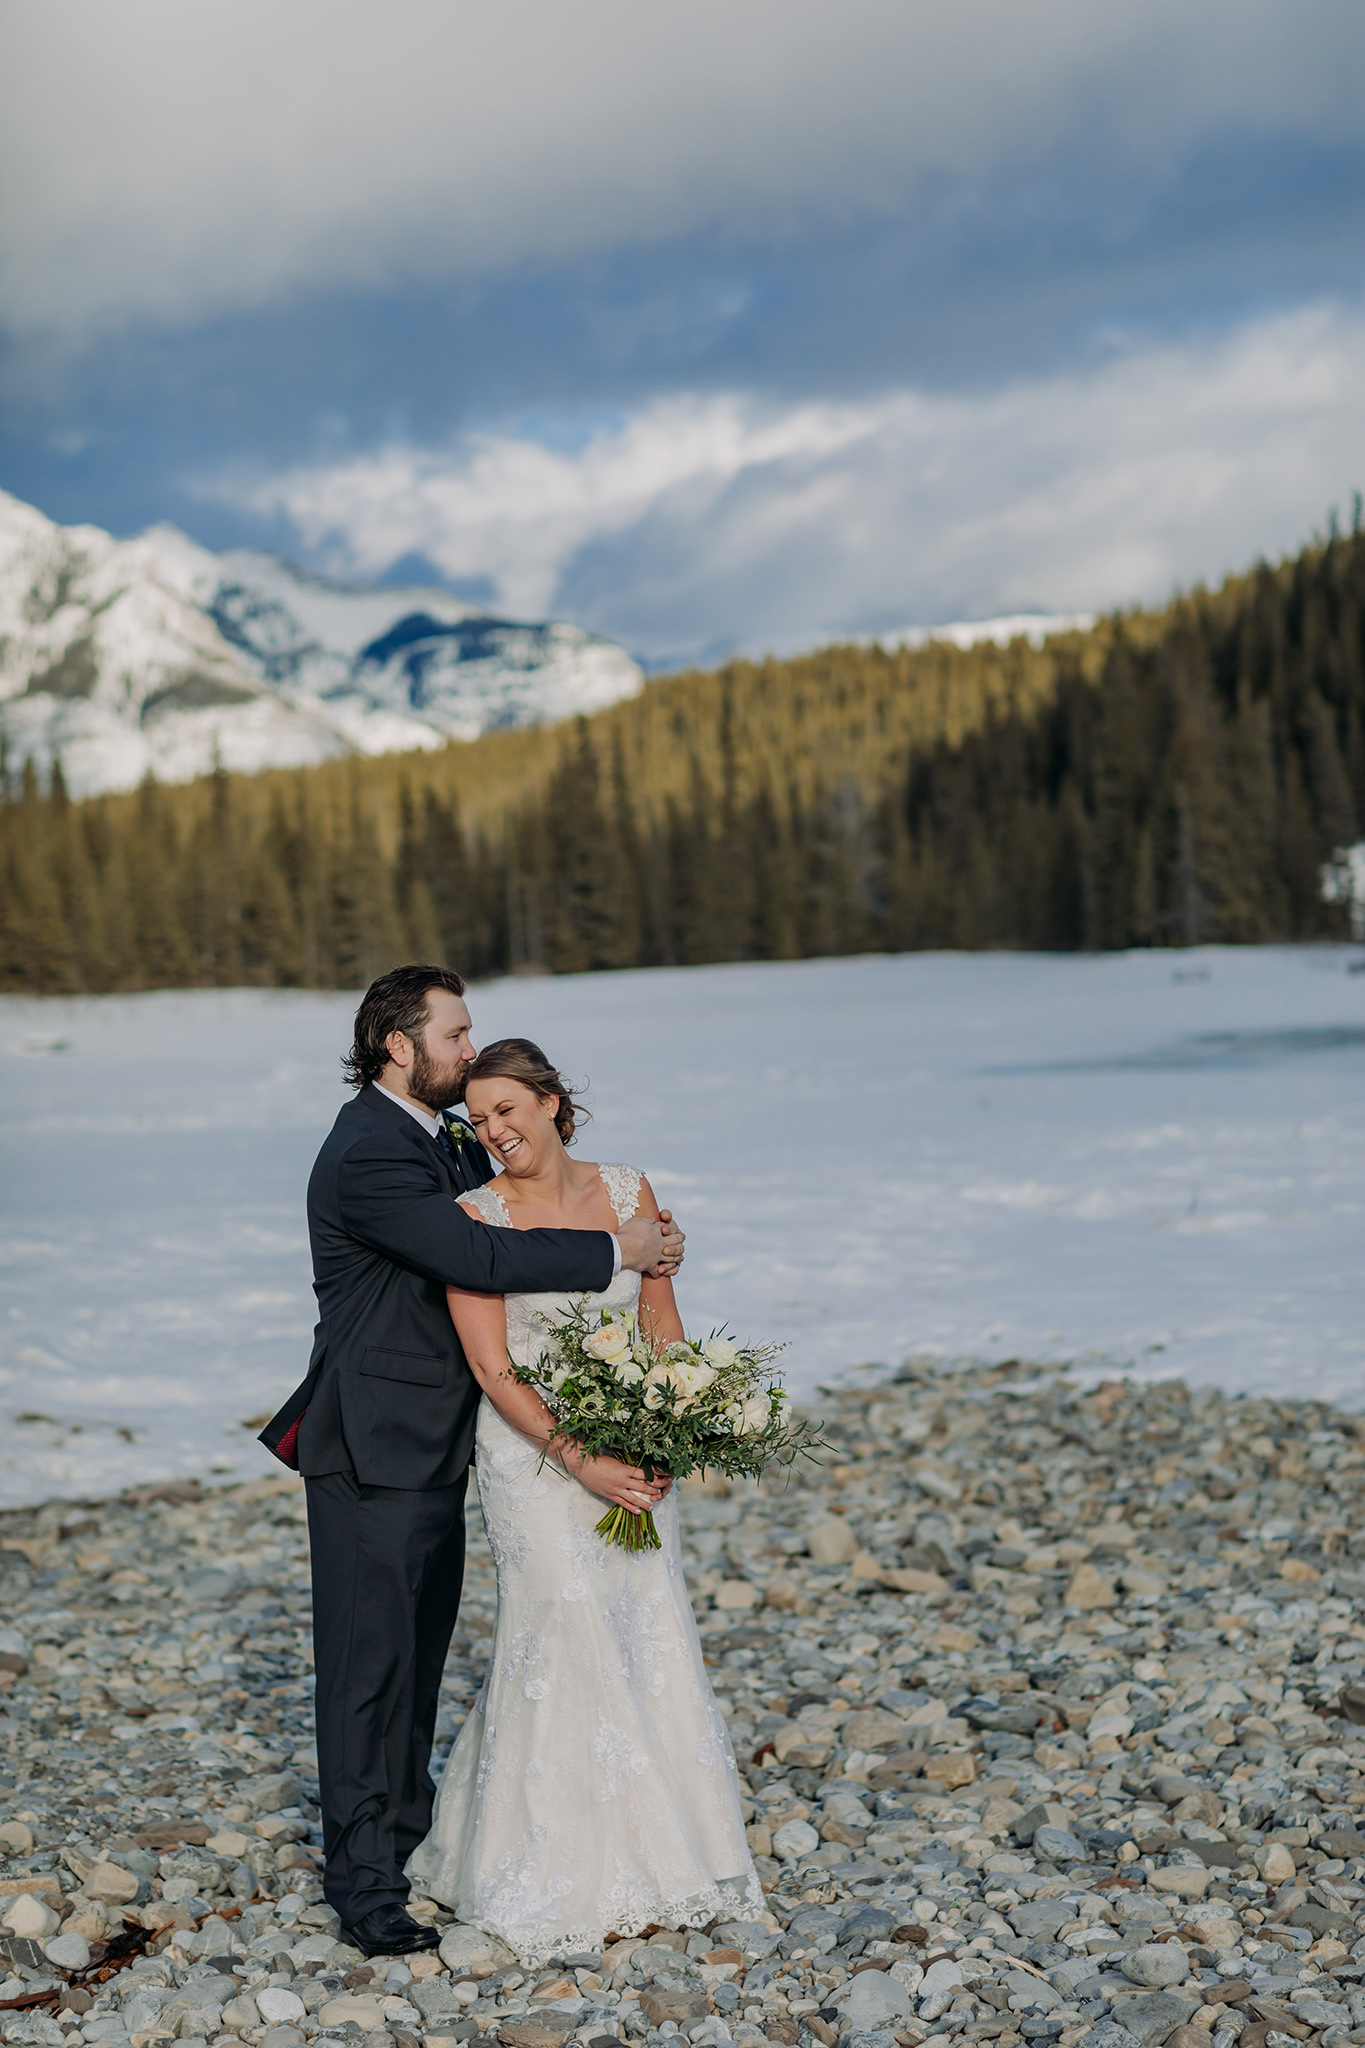 Cascade Ponds Elopement in Banff National Park. Winter mountain wedding photos by Banff Elopement Photographer ENV Photography